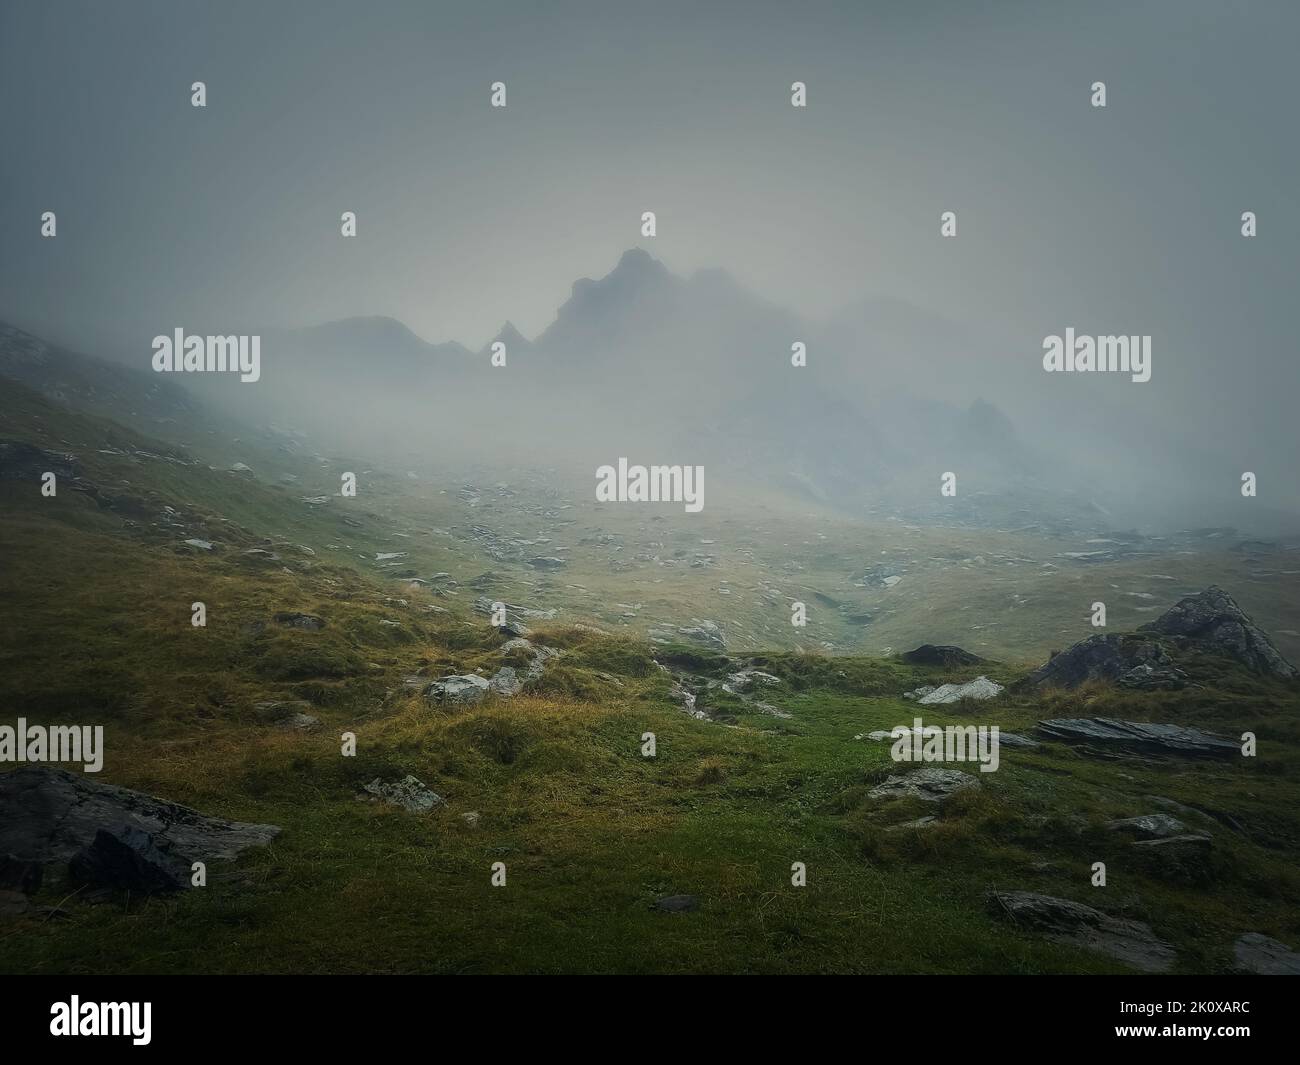 Mountain peak seen through the dense fog. Rainy scene in the mounts, hiking in the mist landscape Stock Photo